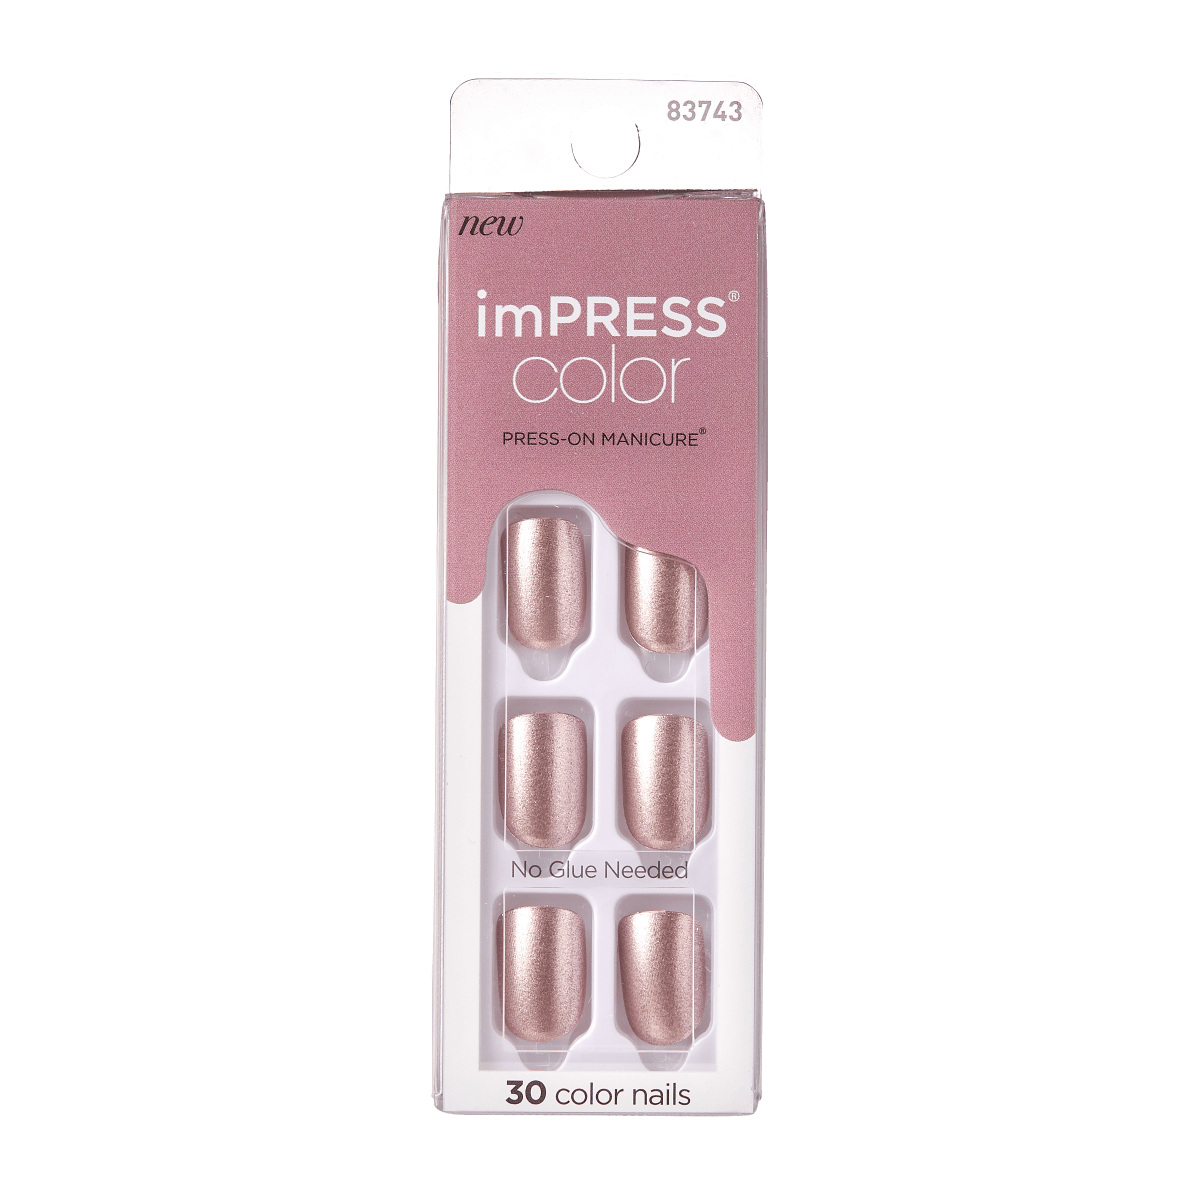 imPRESS Color Press-On Nails - Champagne Pink